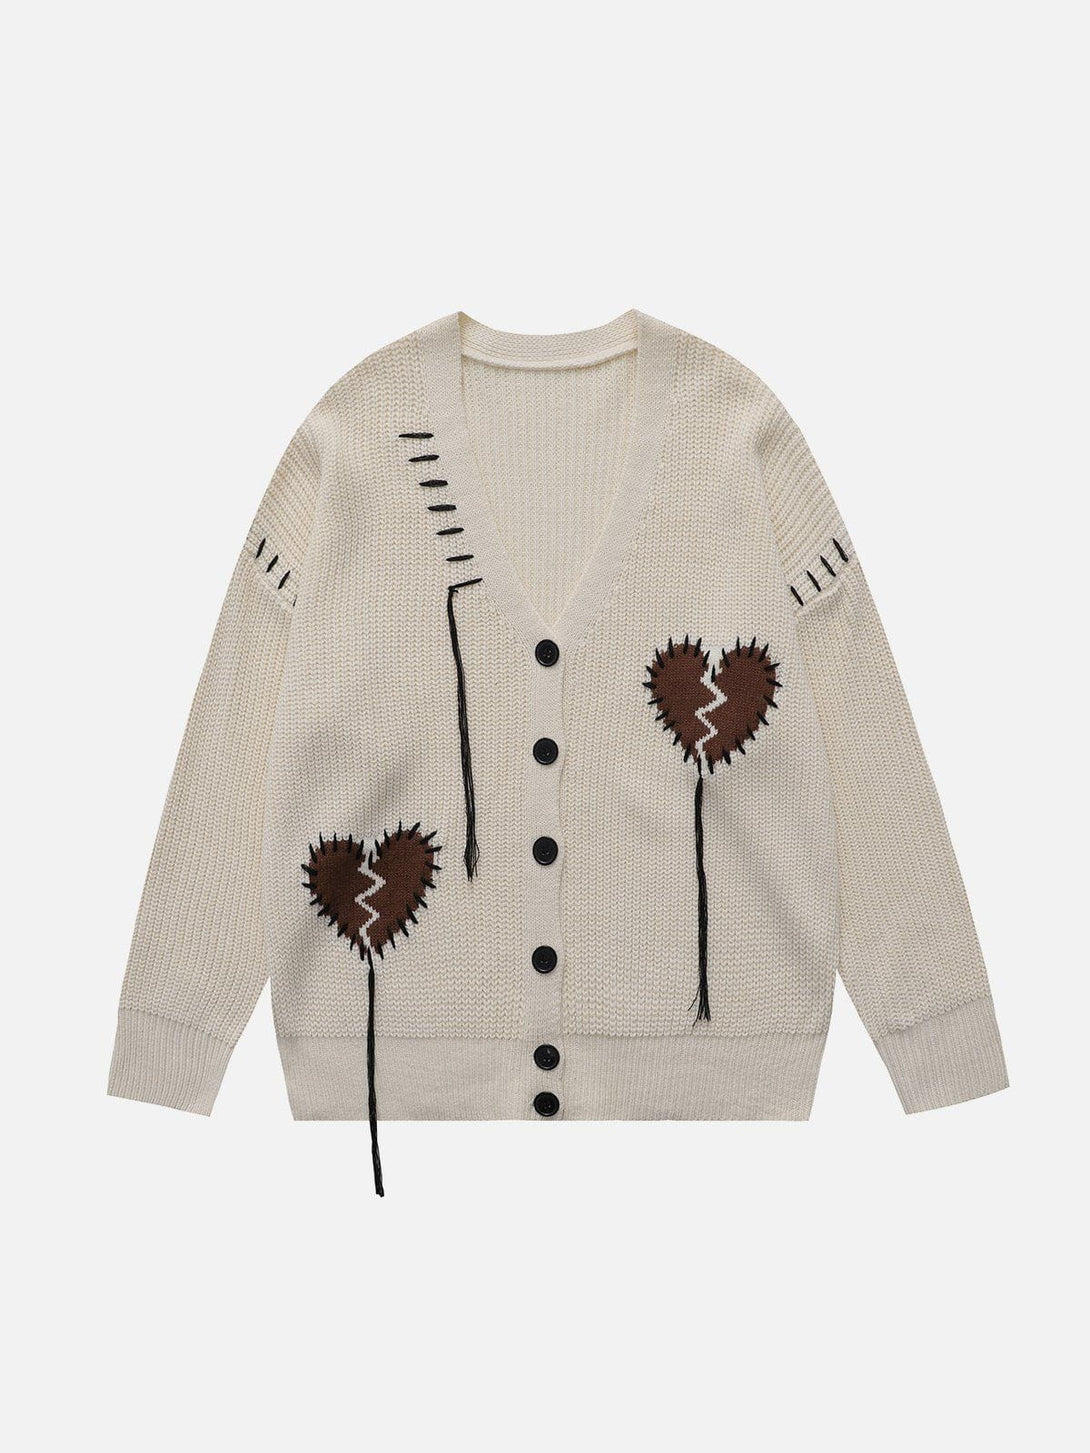 Majesda® - Embroidered Heart Fringe Cardigan outfit ideas streetwear fashion